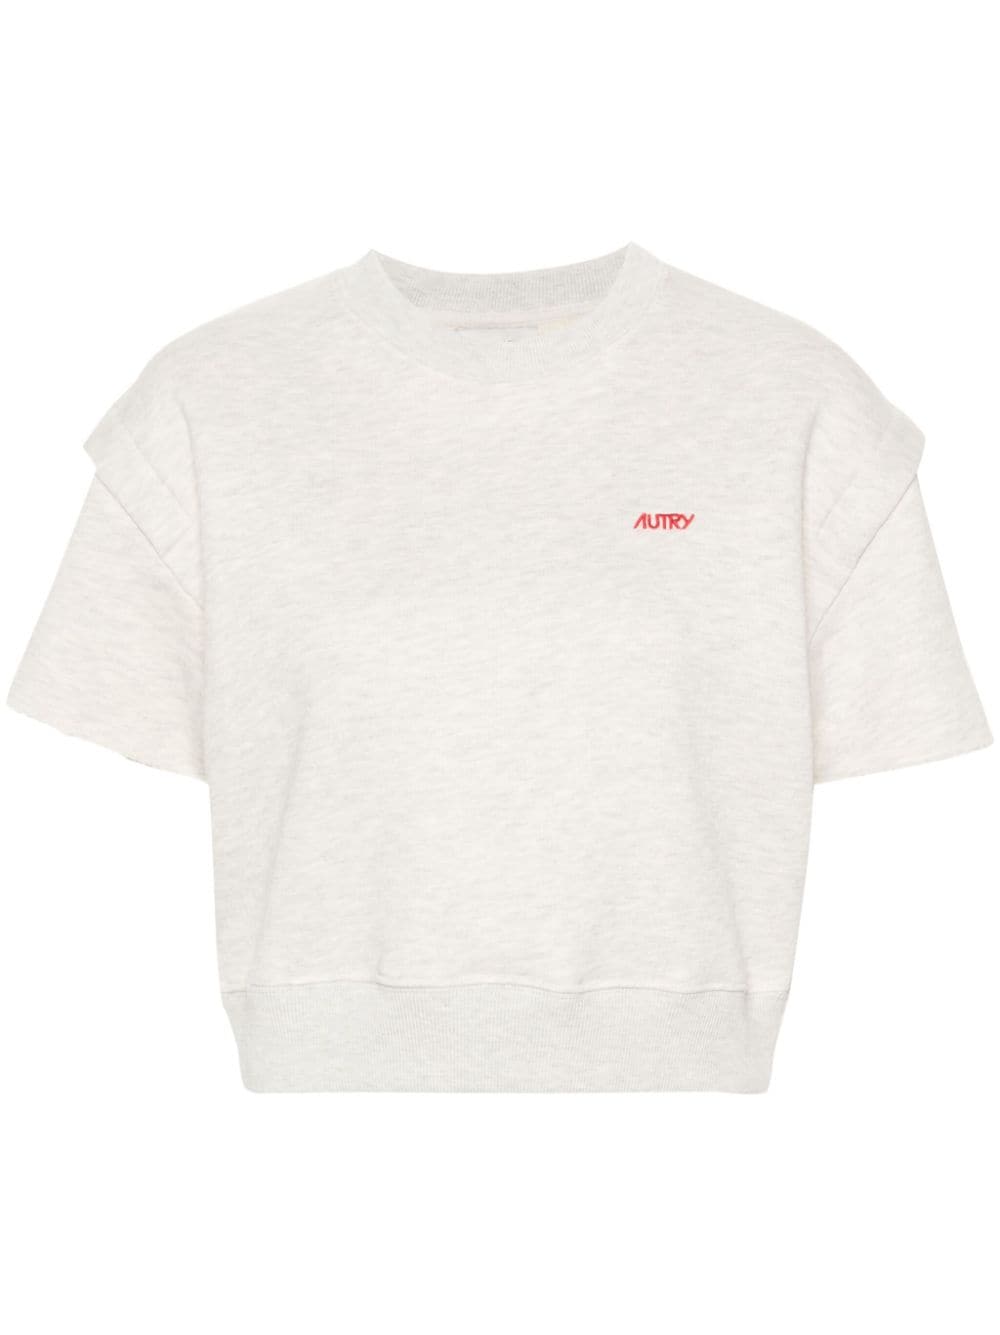 Autry mélange cropped T-shirt - Grey von Autry